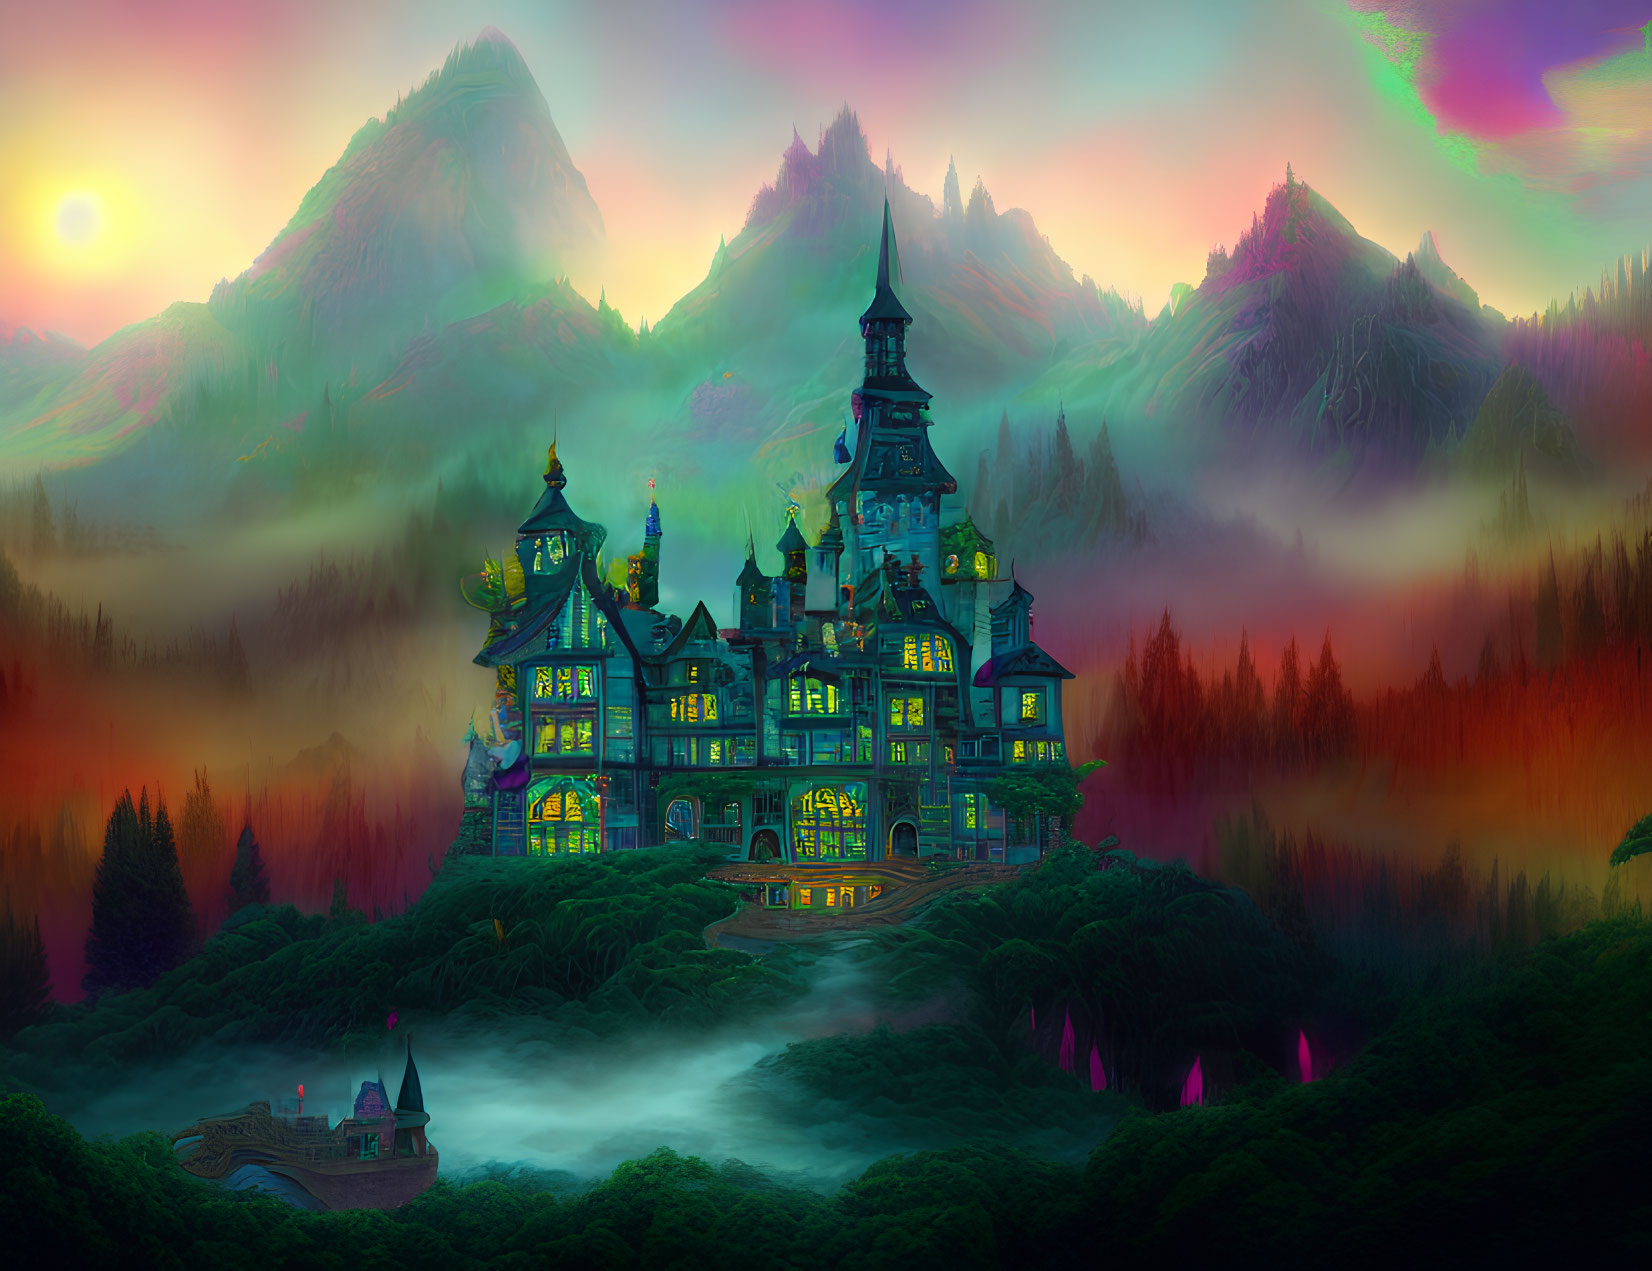 Fantastical castle in vibrant forest under colorful twilight sky